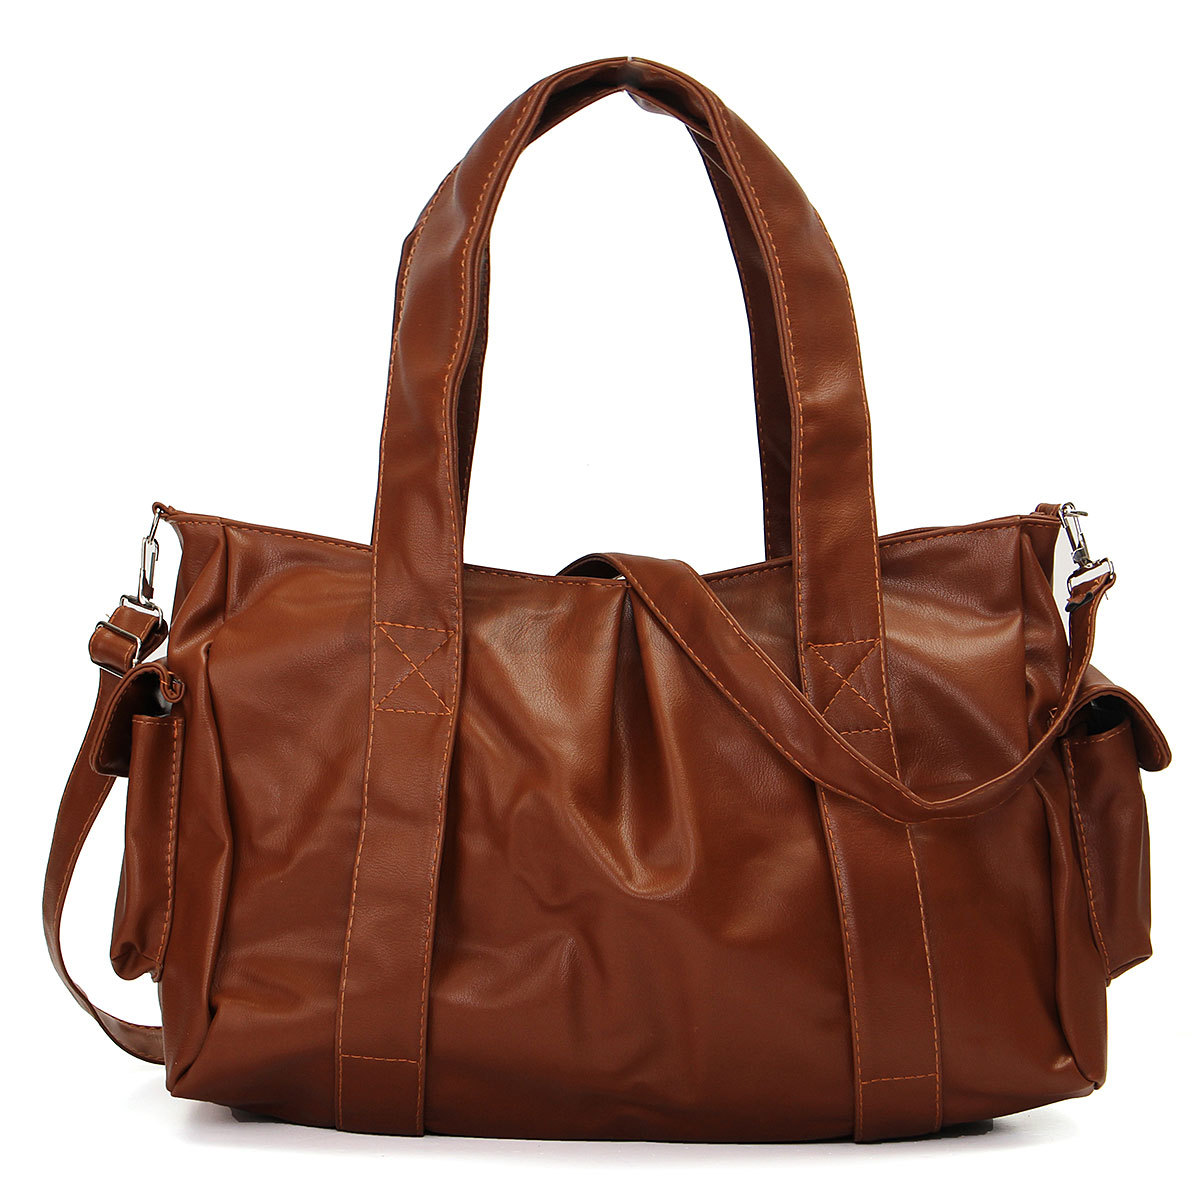 Ladies Women PU Leather Handbag Shoulder Bag Satchel Tote Purse Messenger Bags | eBay